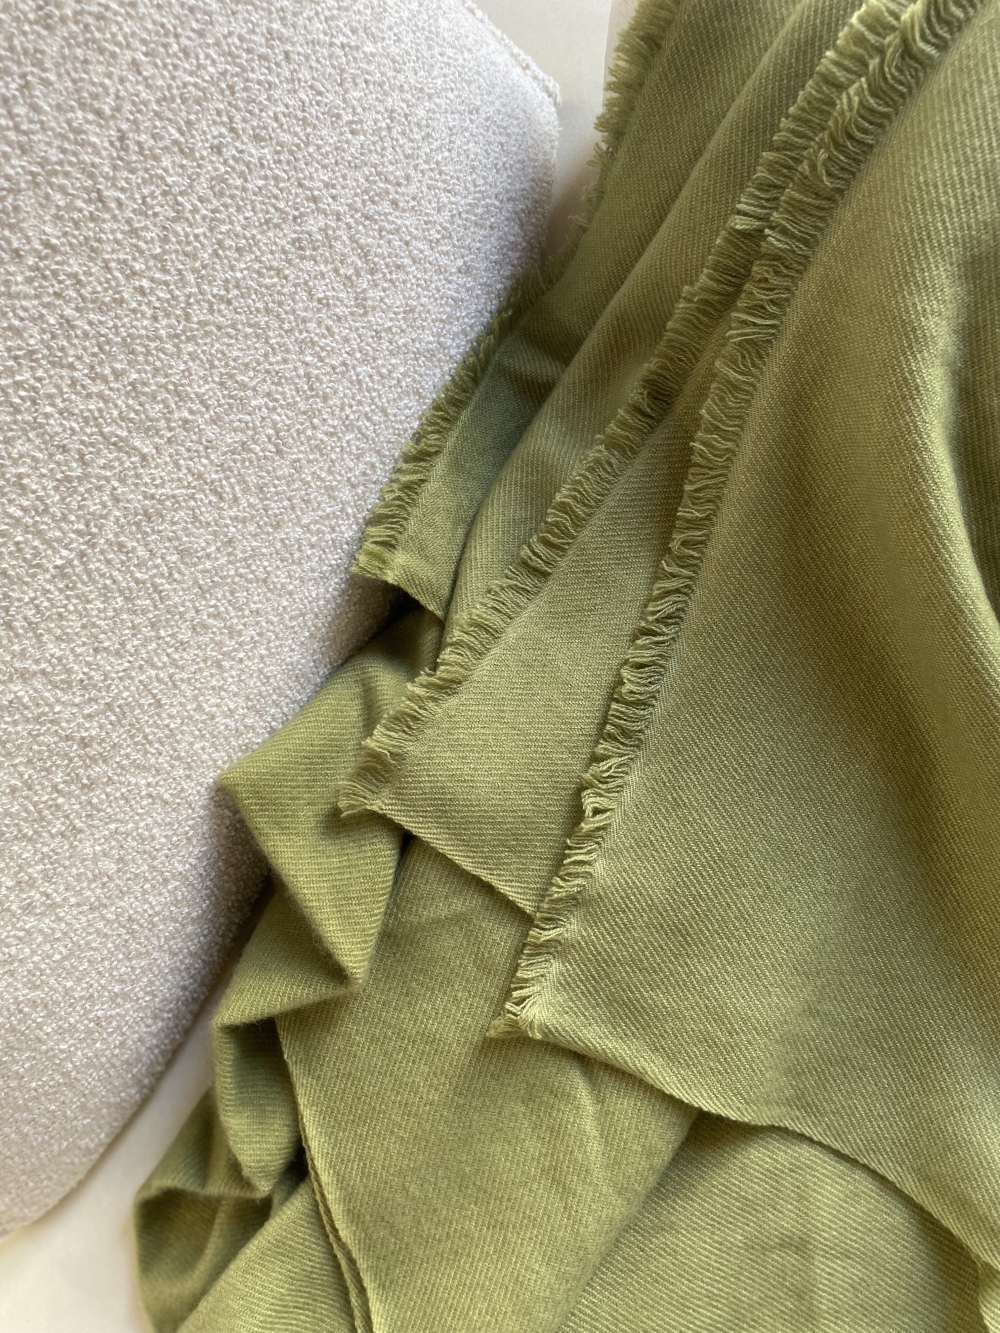 Cashmere accessories blanket toodoo plain s 140 x 200 iguana 140 x 200 cm